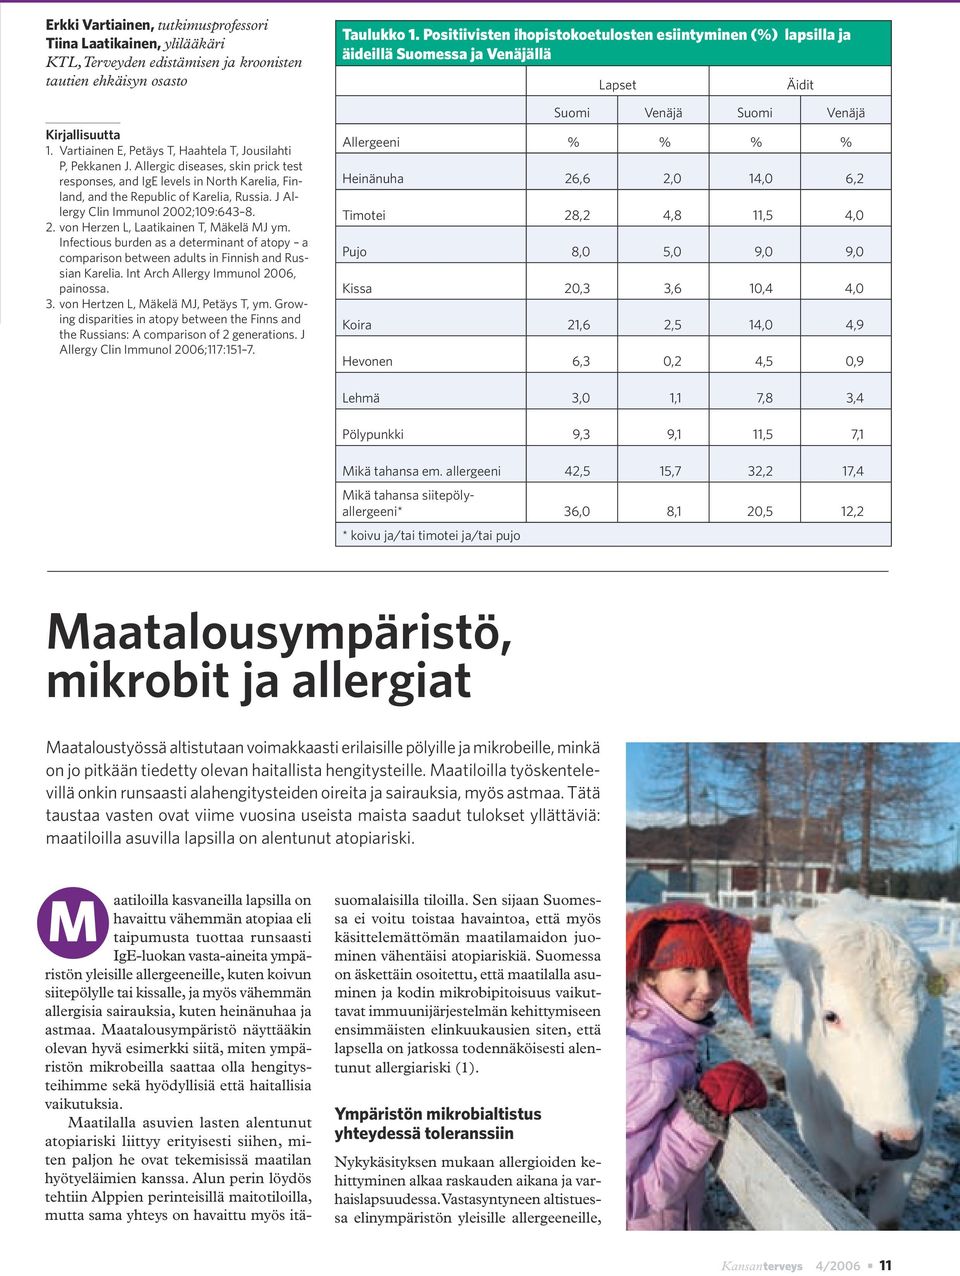 J Allergy Clin Immunol 2002;109:643 8. 2. von Herzen L, Laatikainen T, Mäkelä MJ ym. Infectious burden as a determinant of atopy a comparison between adults in Finnish and Russian Karelia.